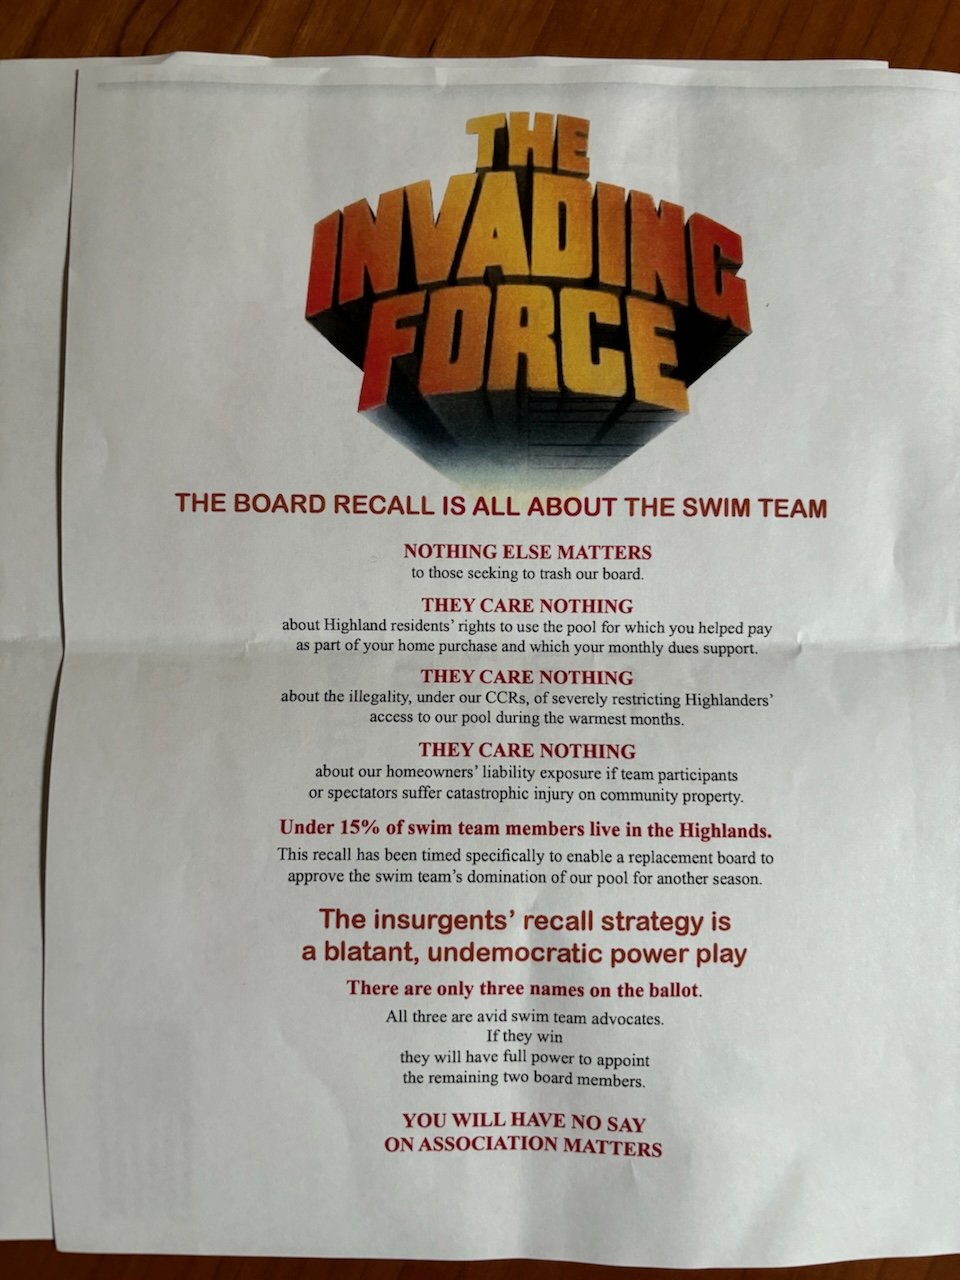 invading force flyer.jpg